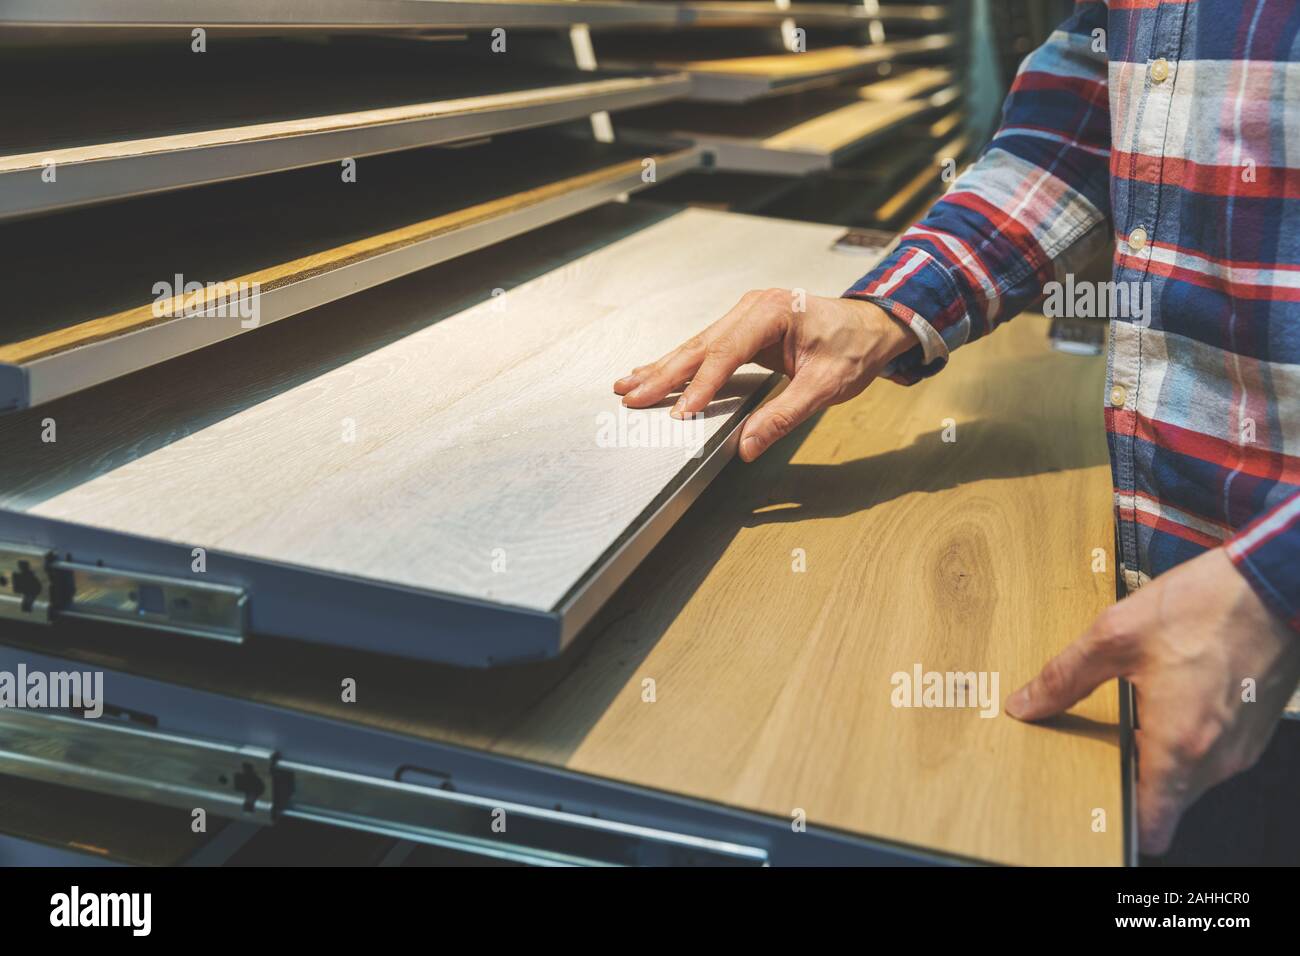 man choosing kitchen countertop materials at interior design shop Stock Photo